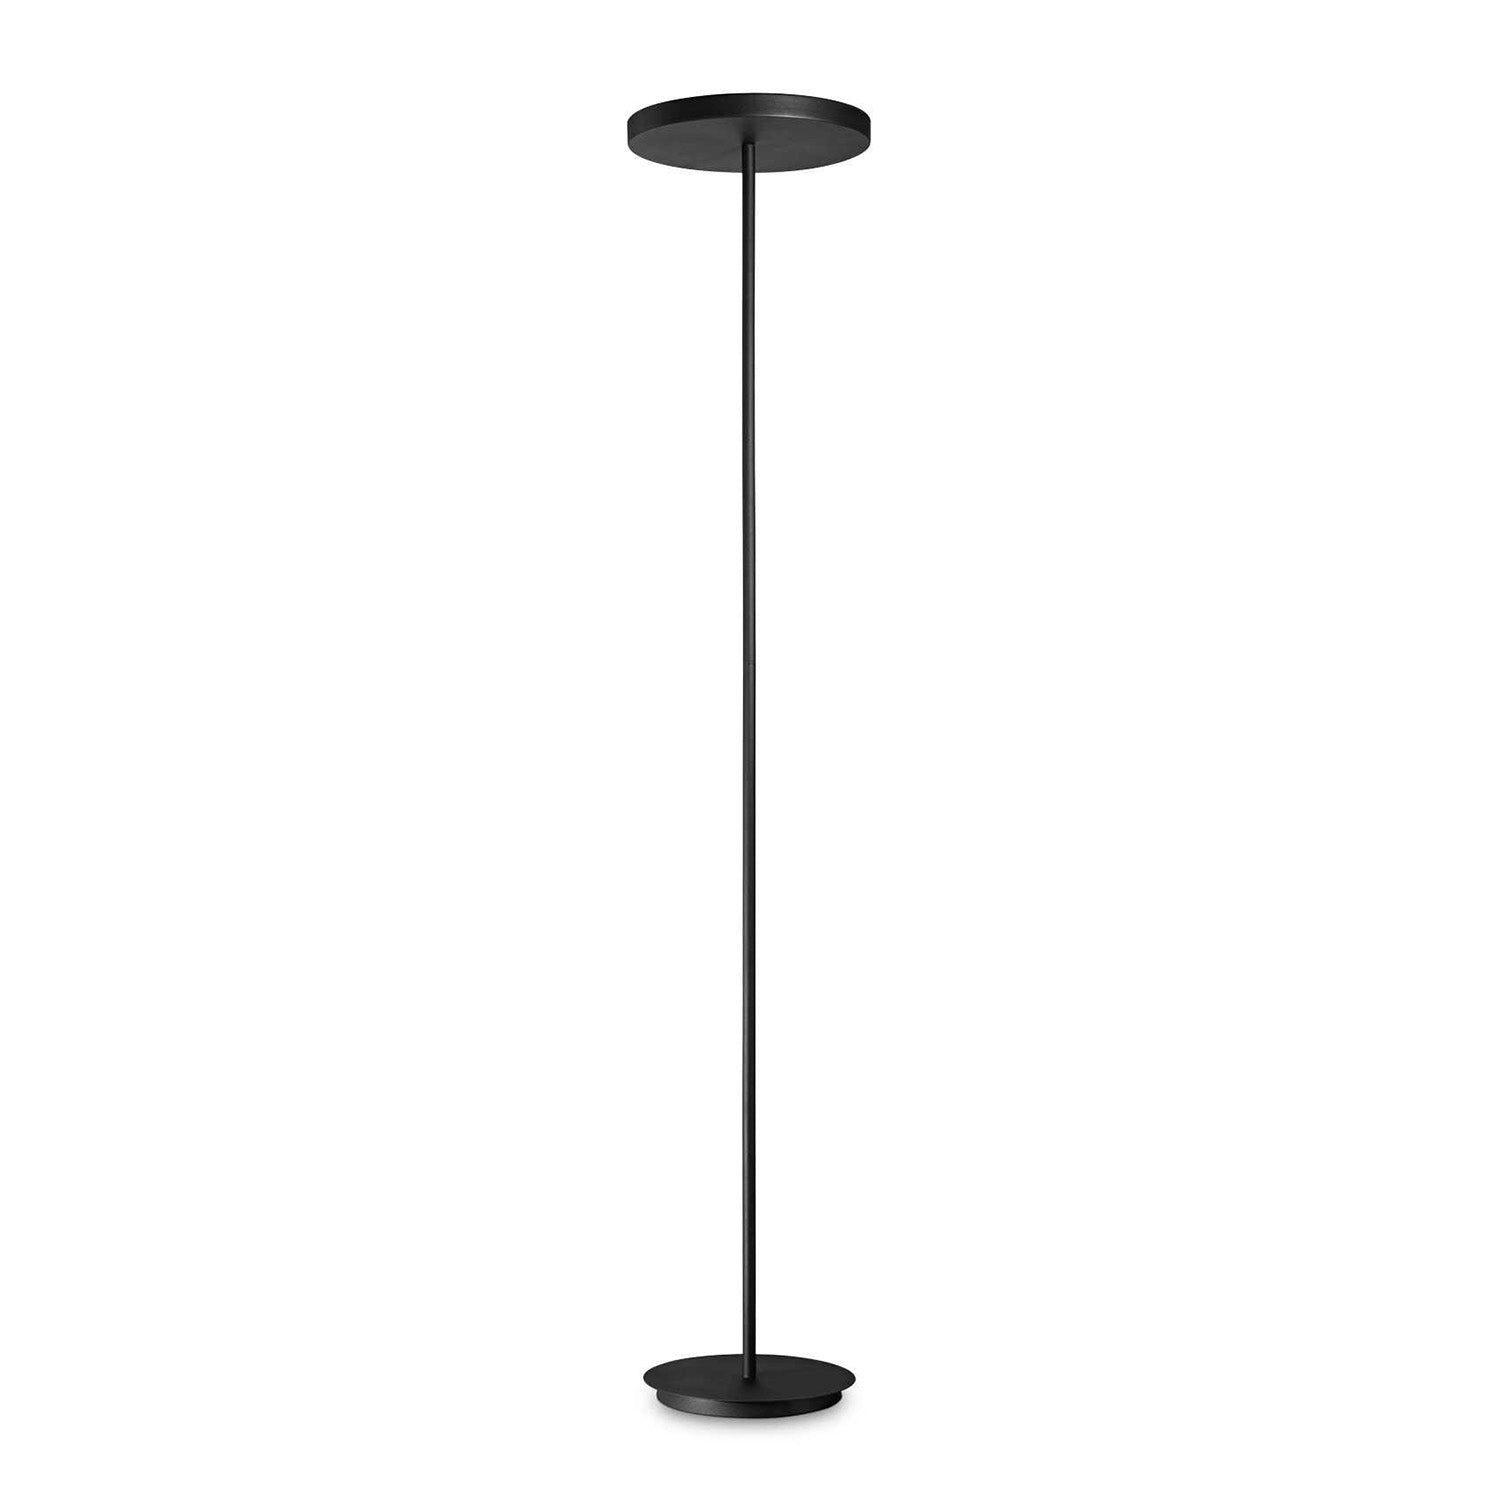 COLONNA - Minimalist floor lamp with upward lighting